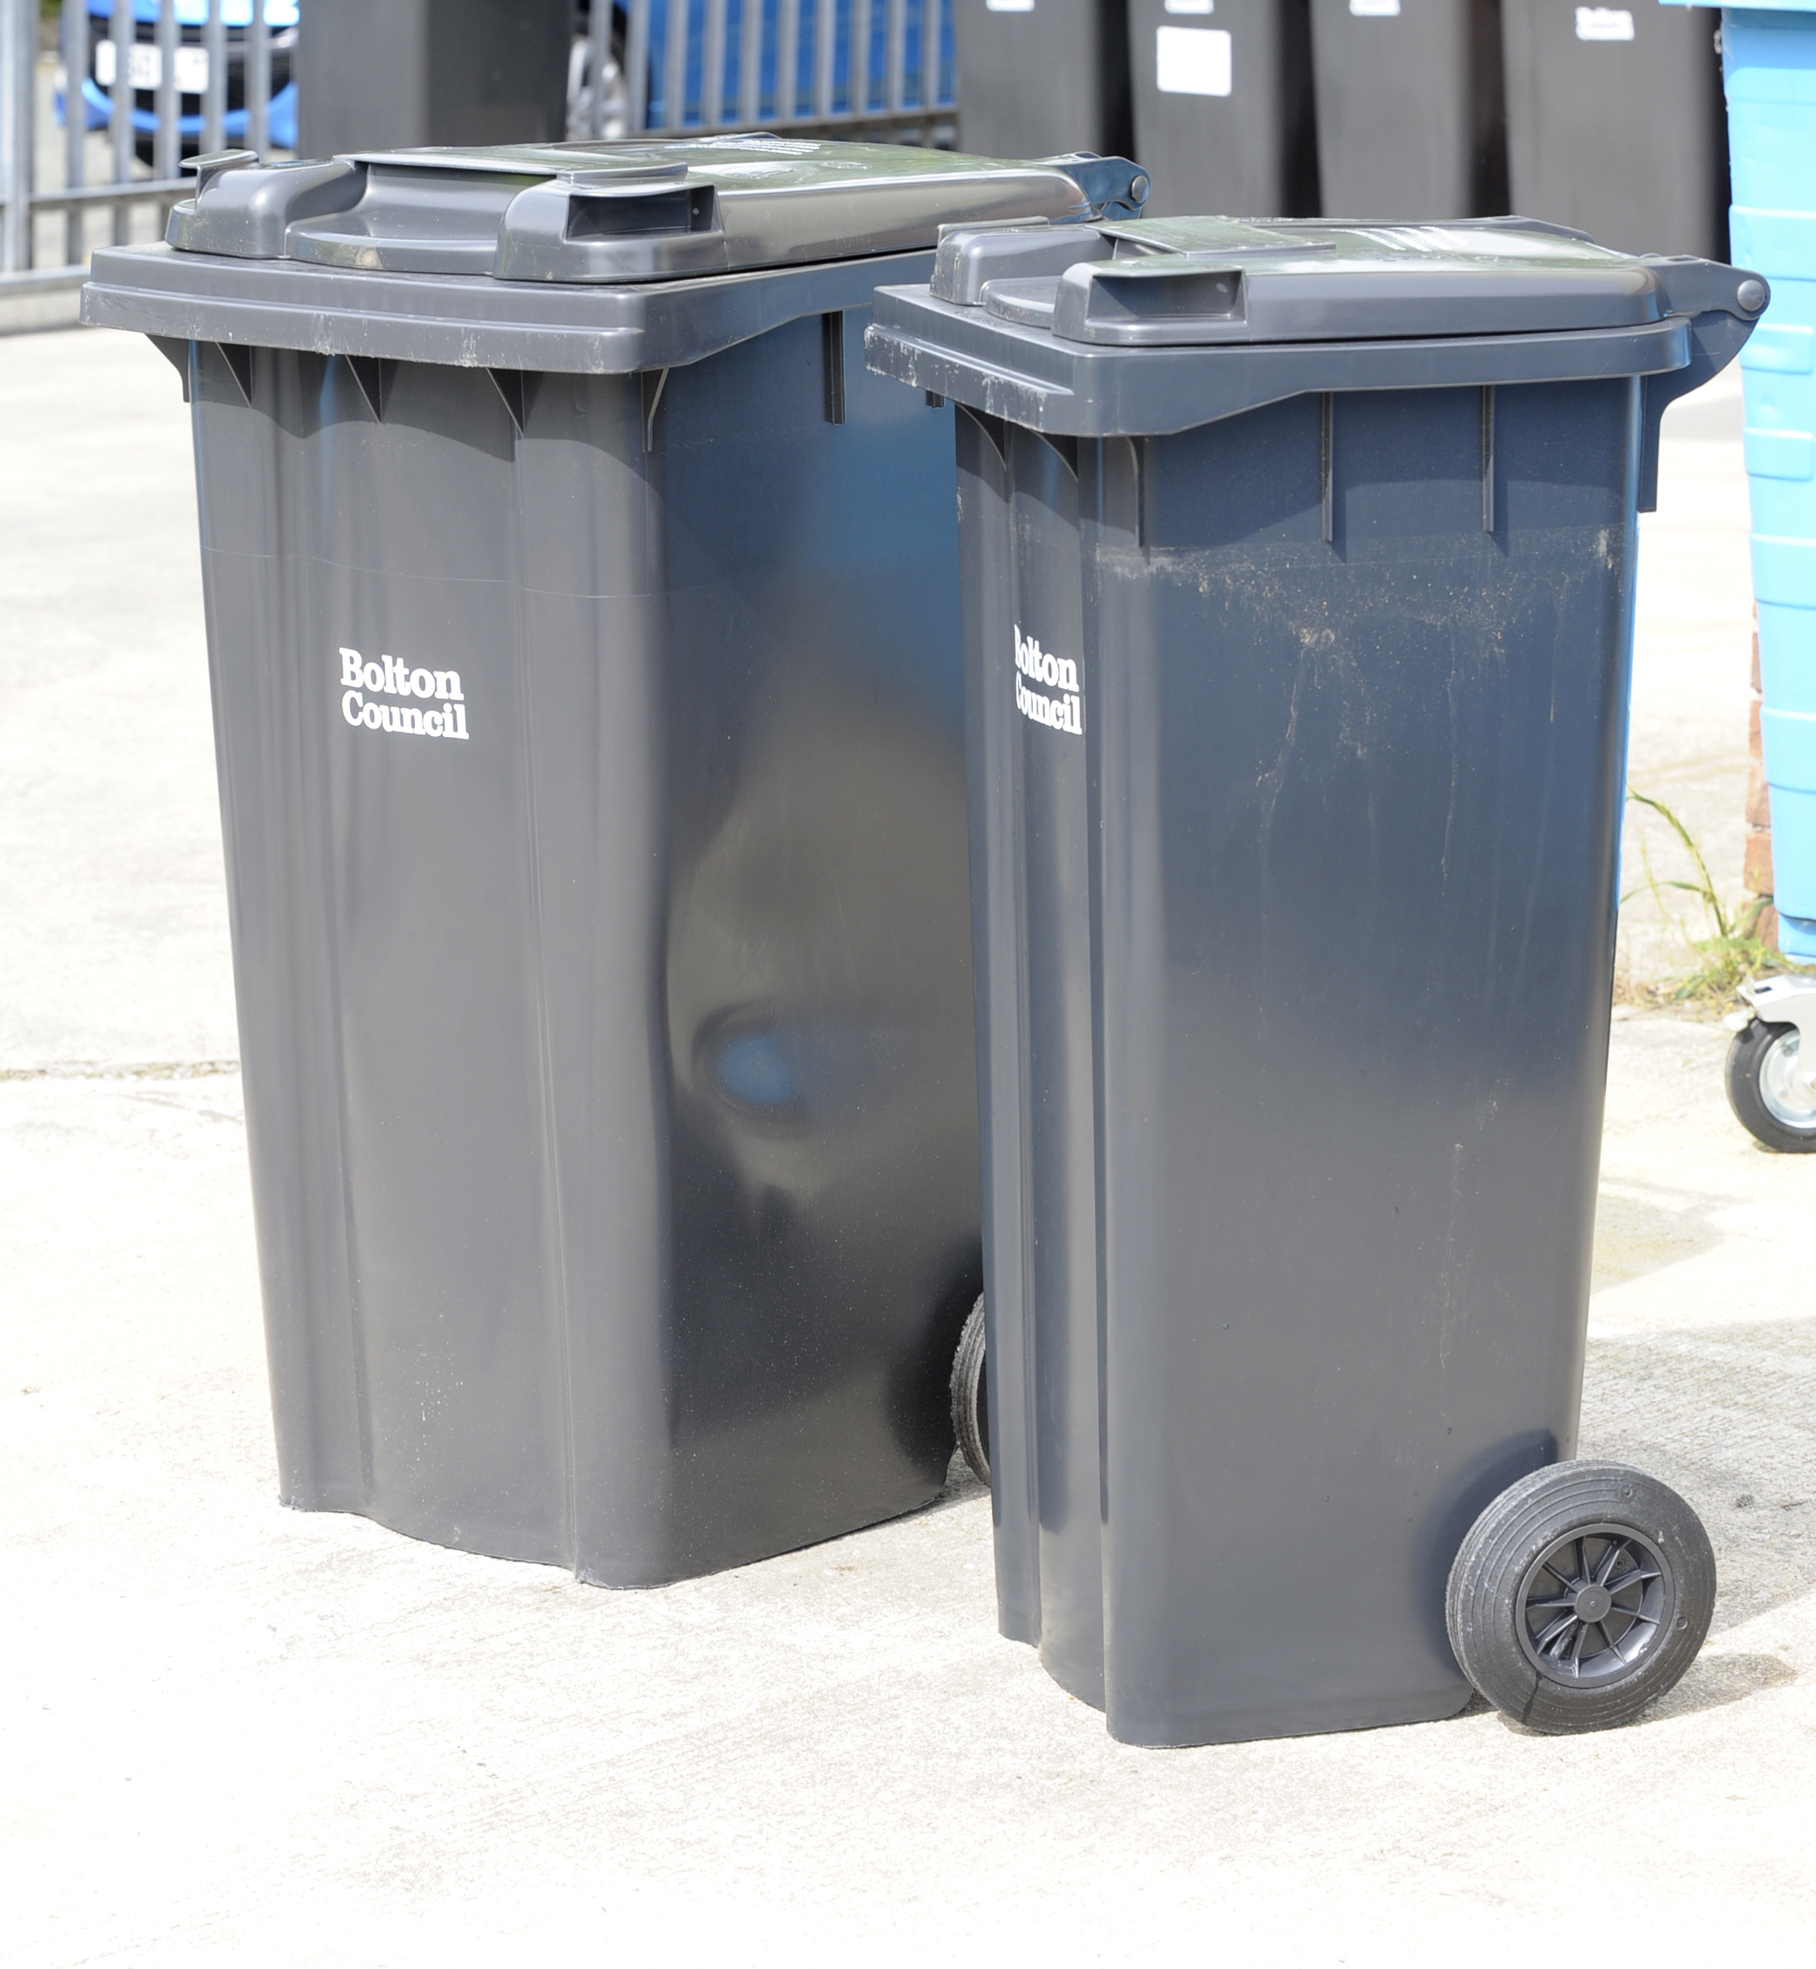 Bolton to introduce new size grey bins! 3770259